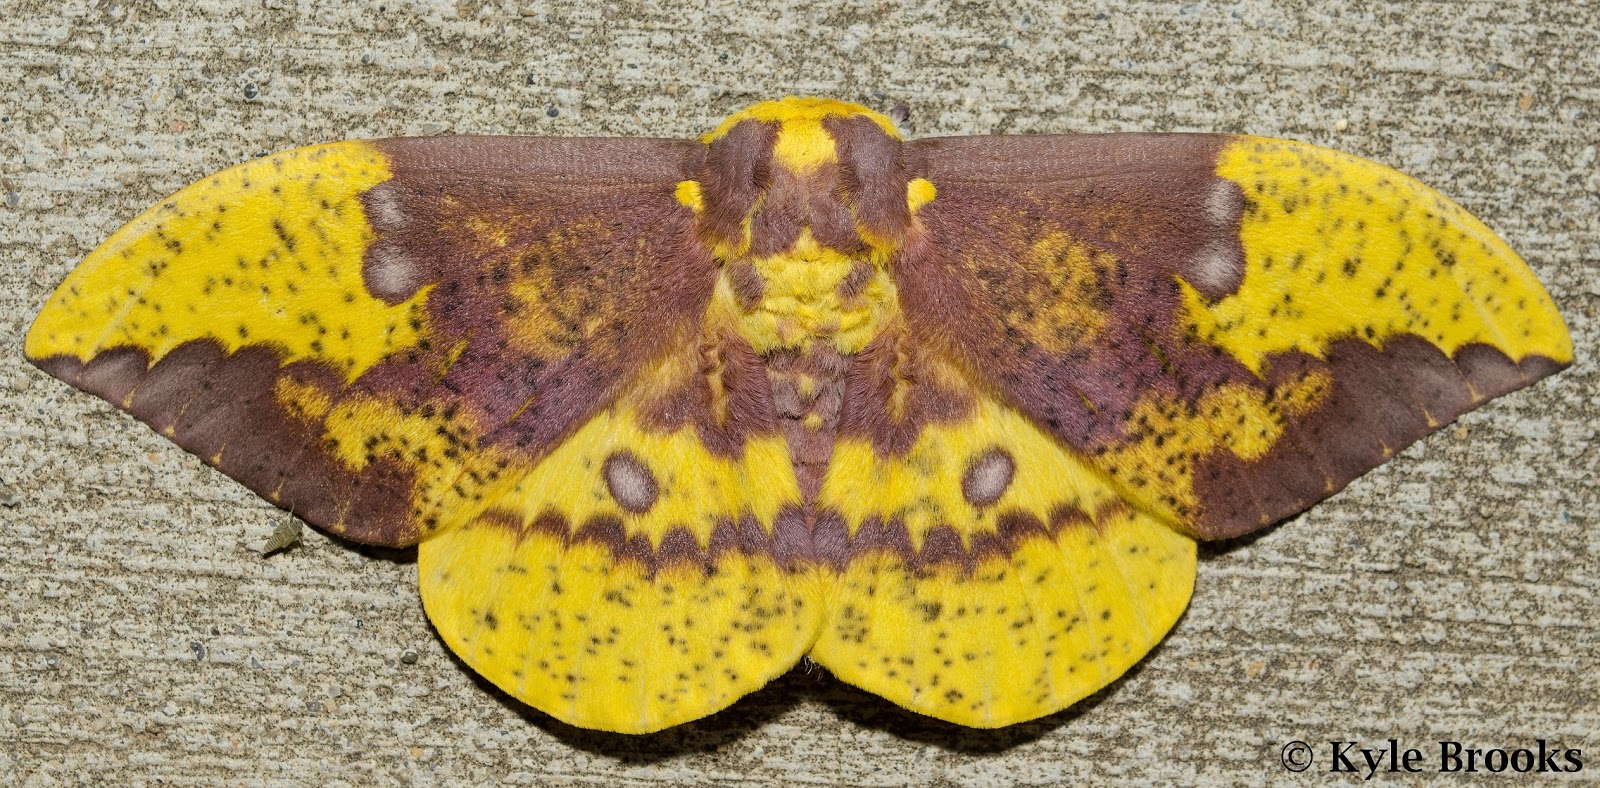 Imperial Moth, Eacles imperialis